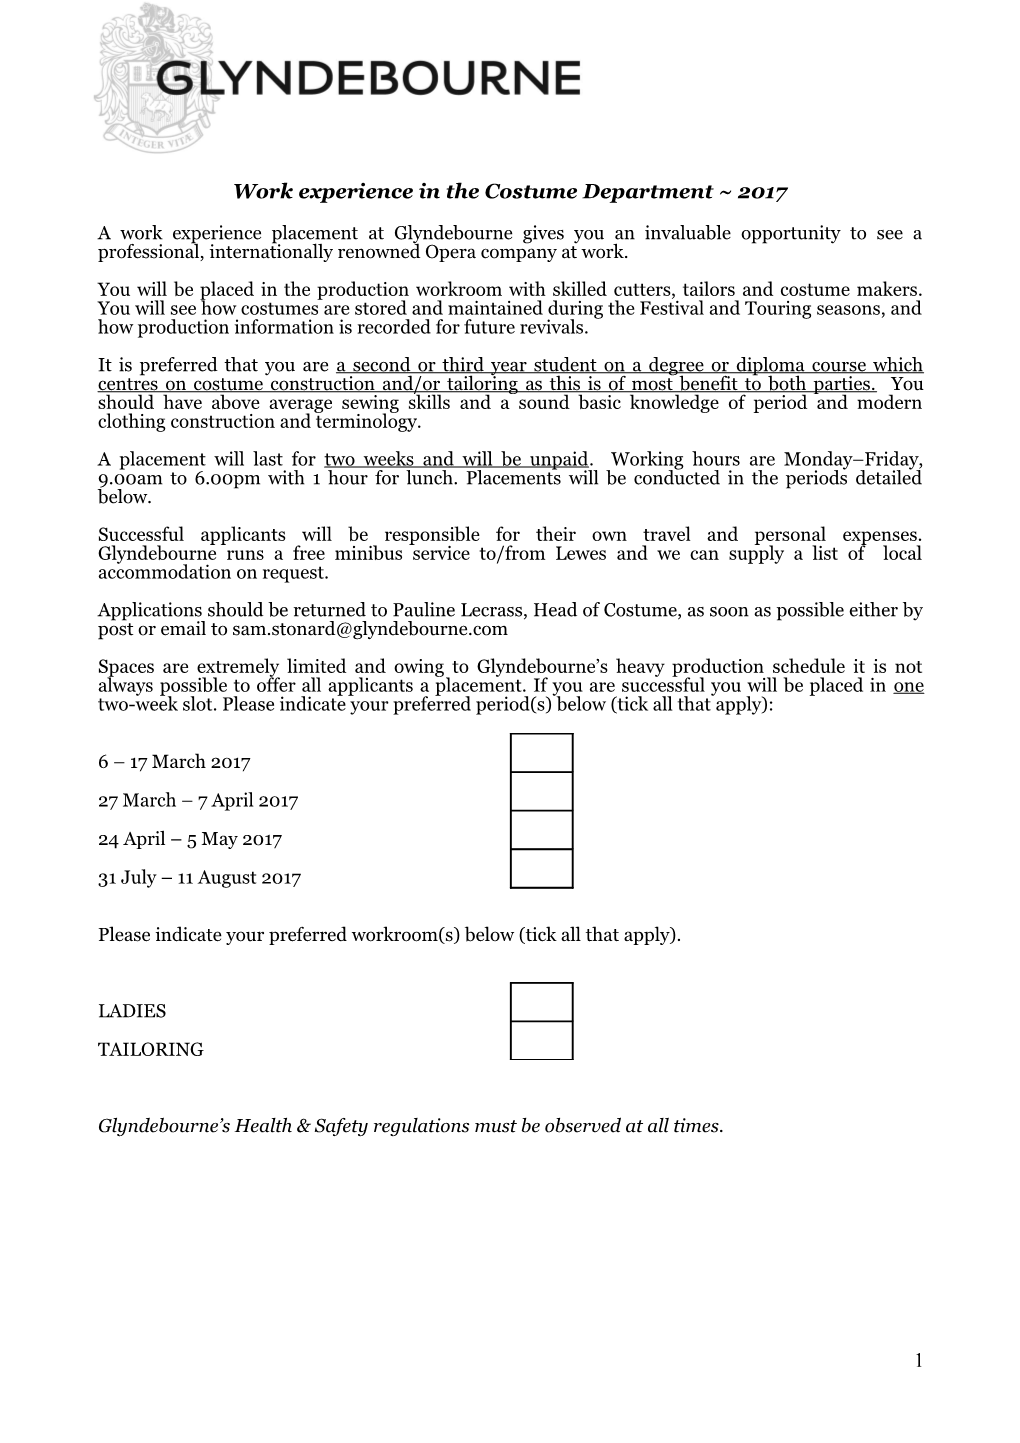 Glyndebourne Work Experience Application Form